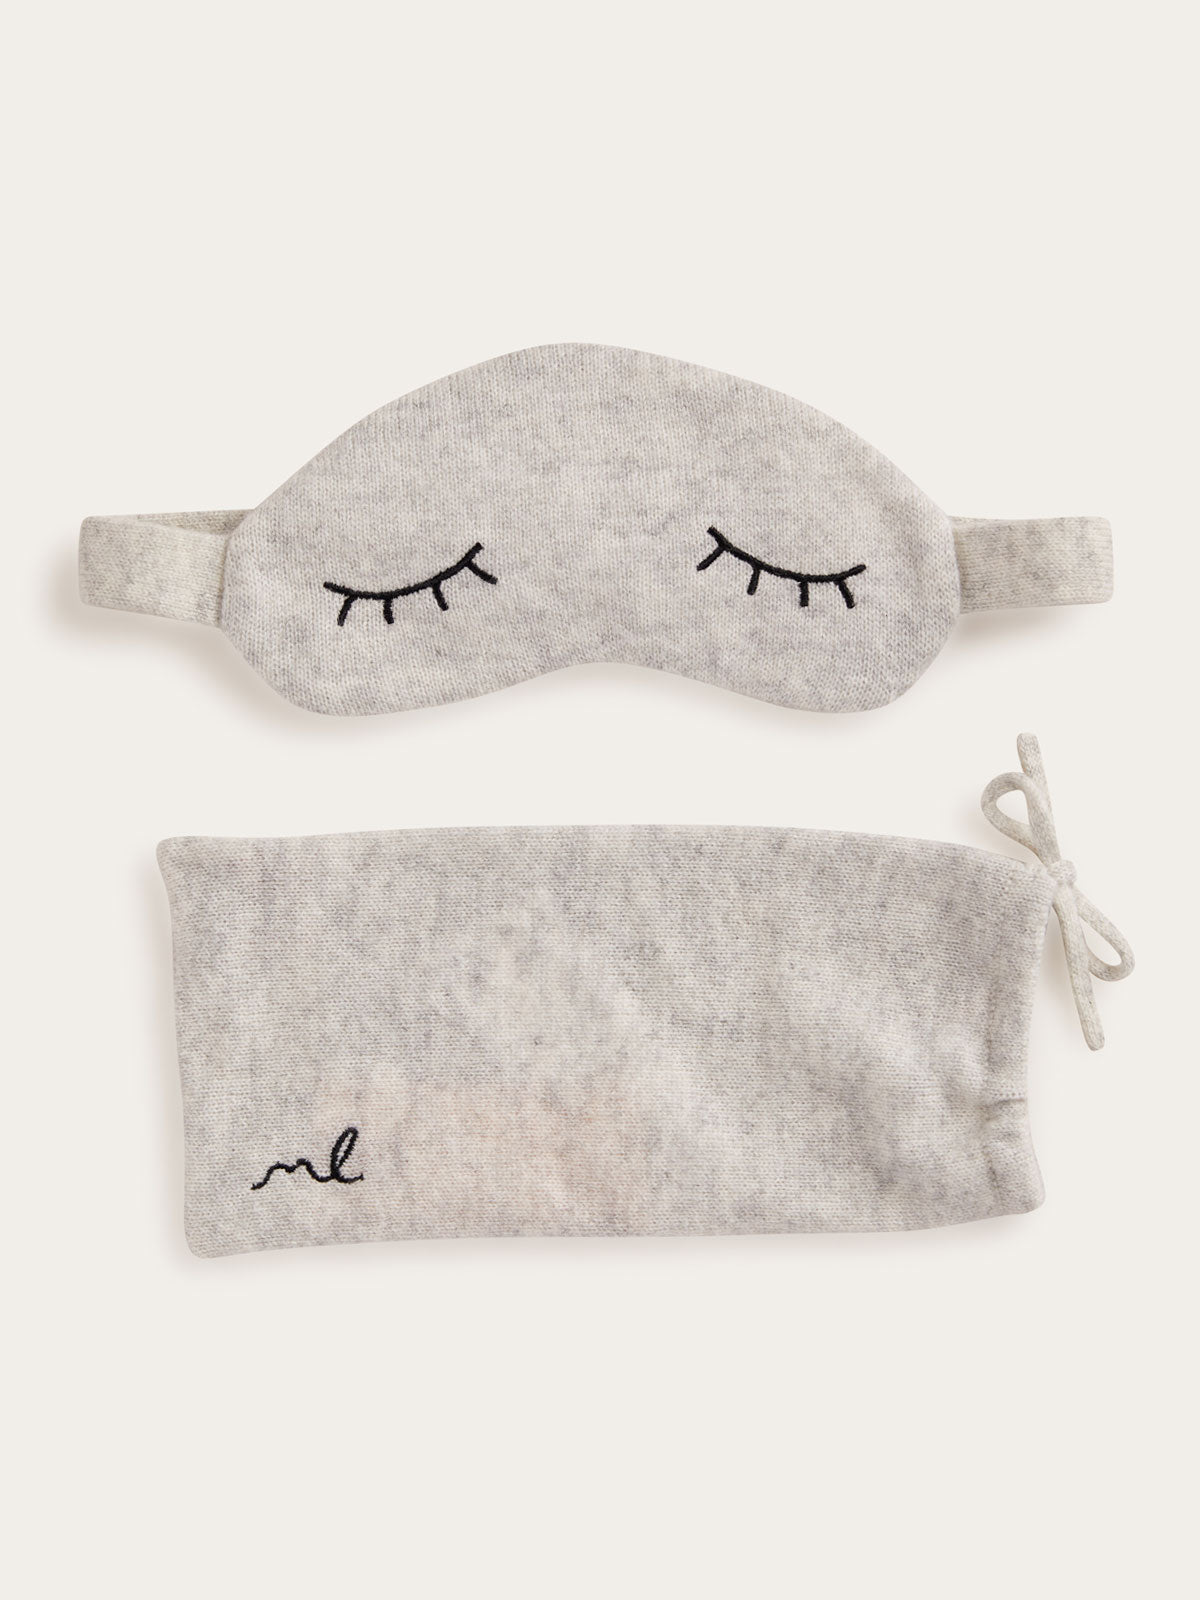 Sleepy Lids Cashmere Mask Set in Gray By Morgan Lane